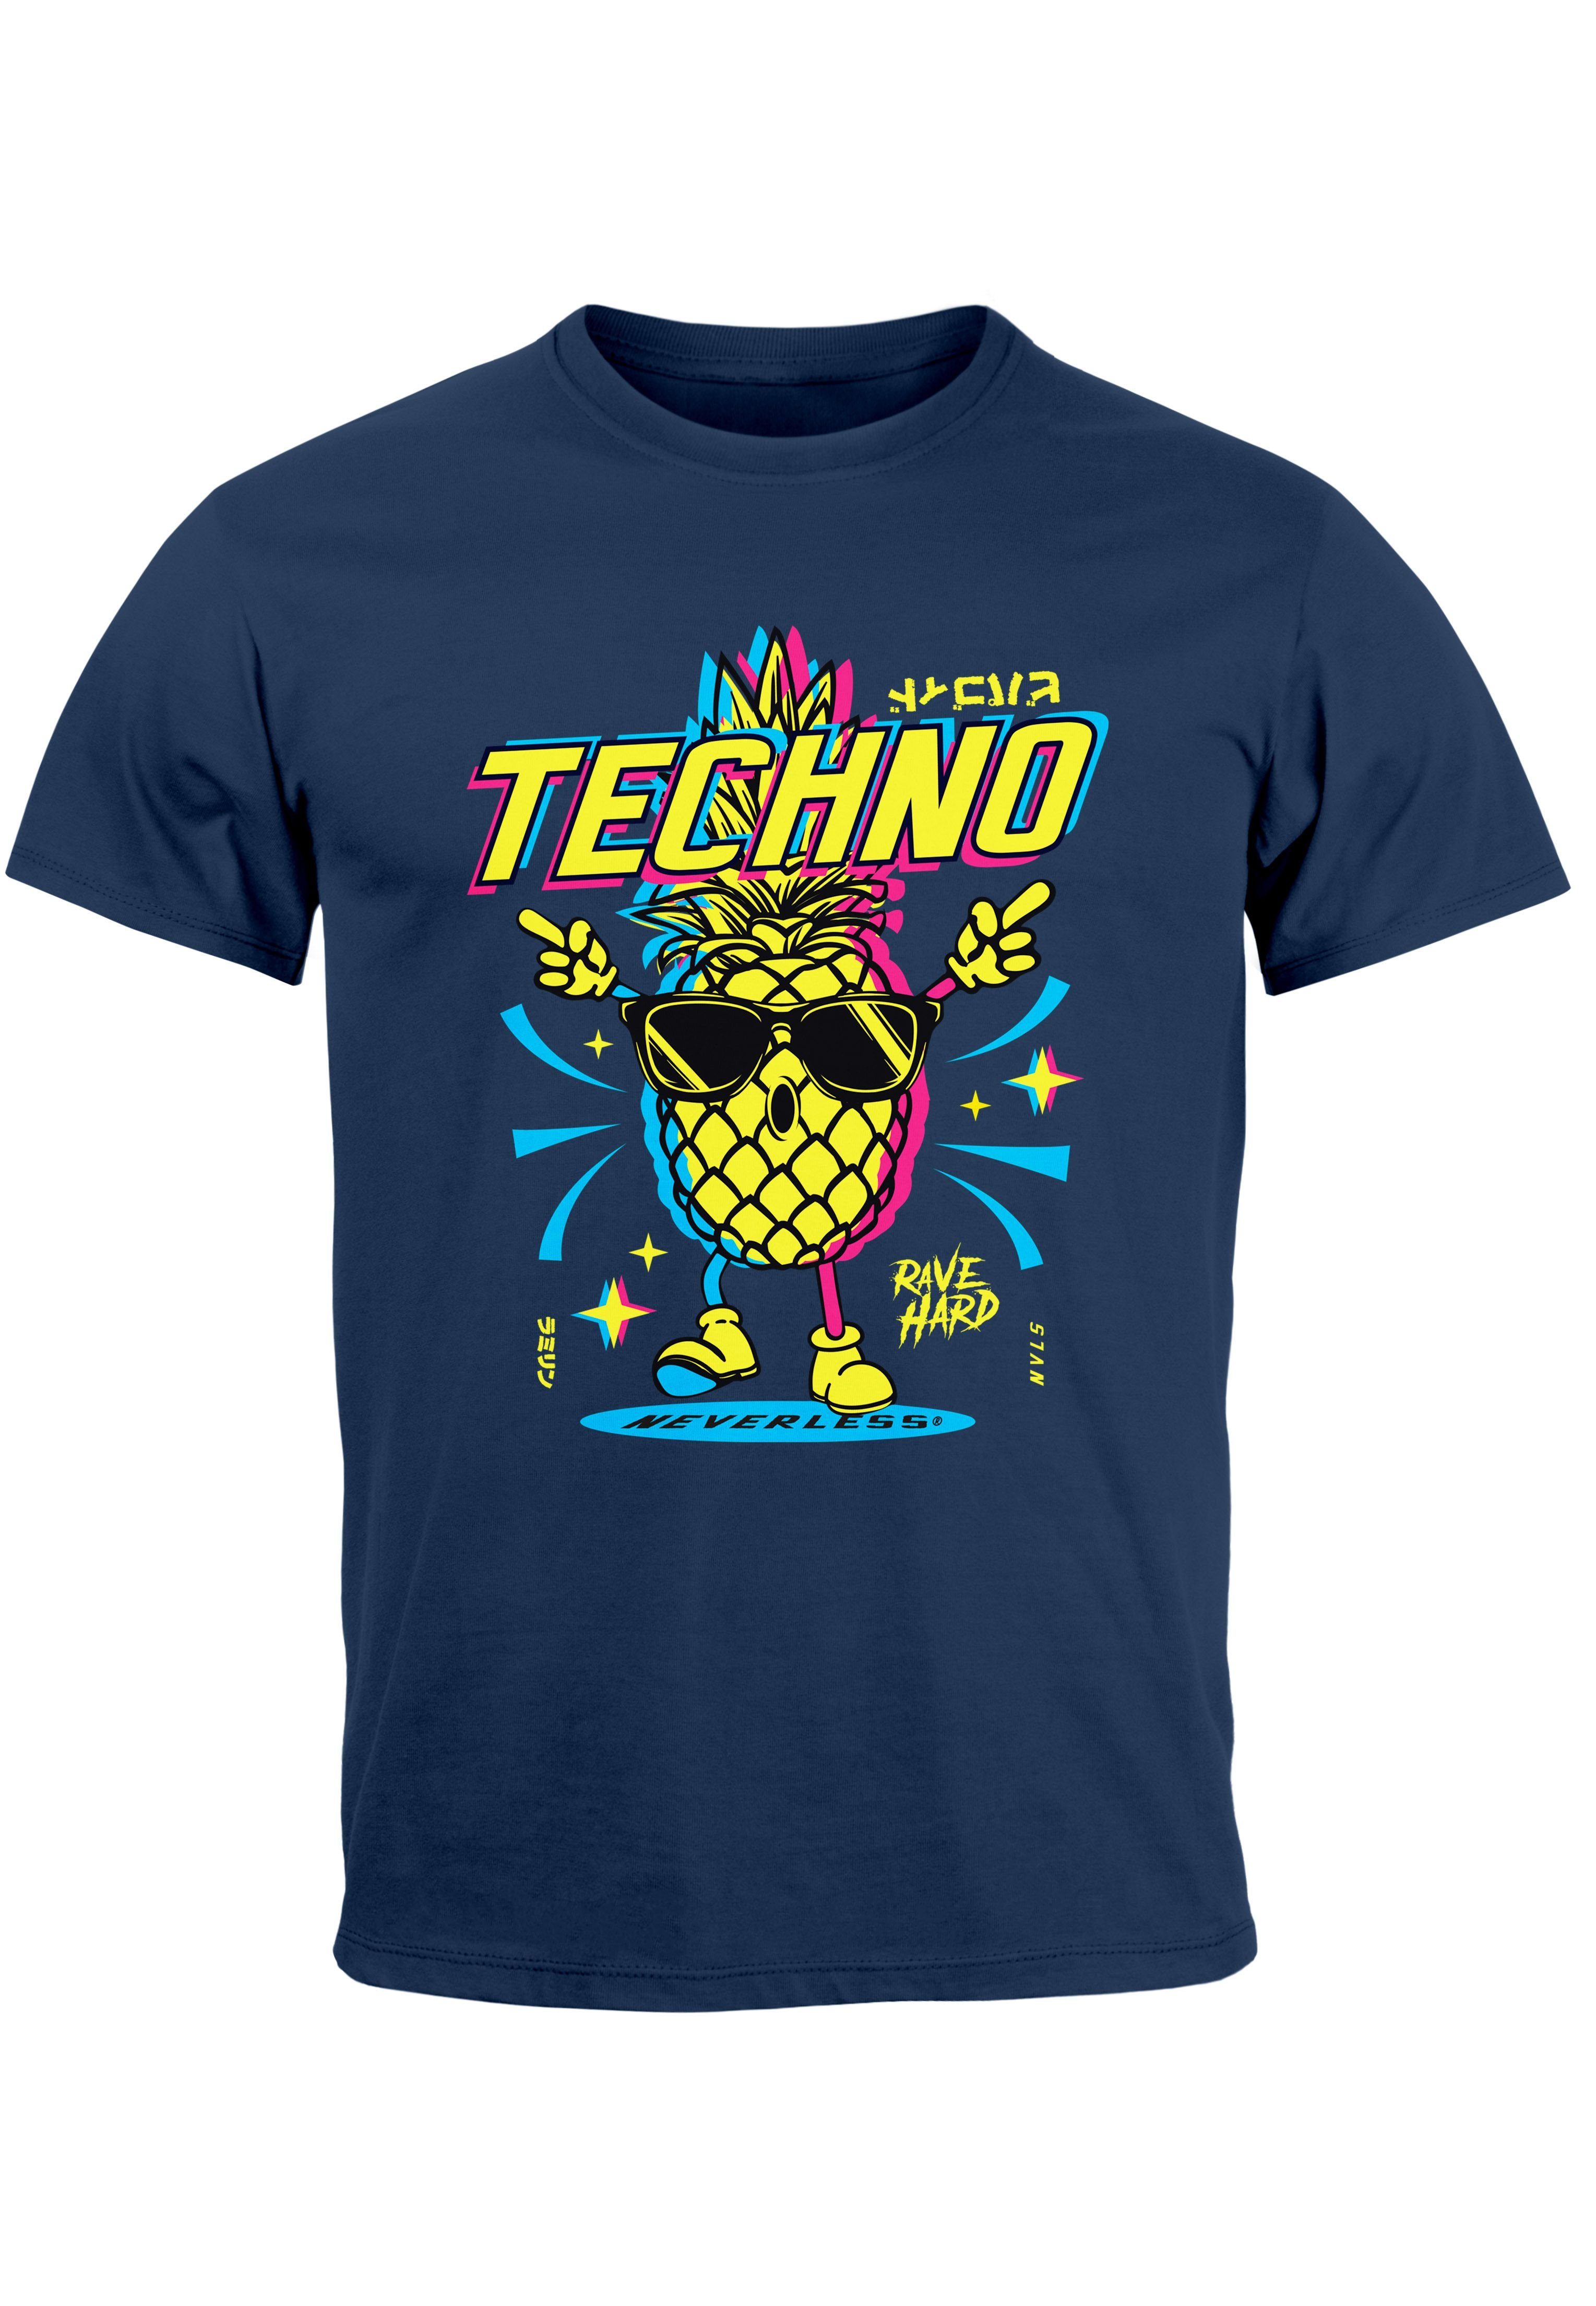 Neverless Print-Shirt Herren T-Shirt Shirt Techno Tanzen Lustig Ananas Rave Party Printshirt mit Print navy